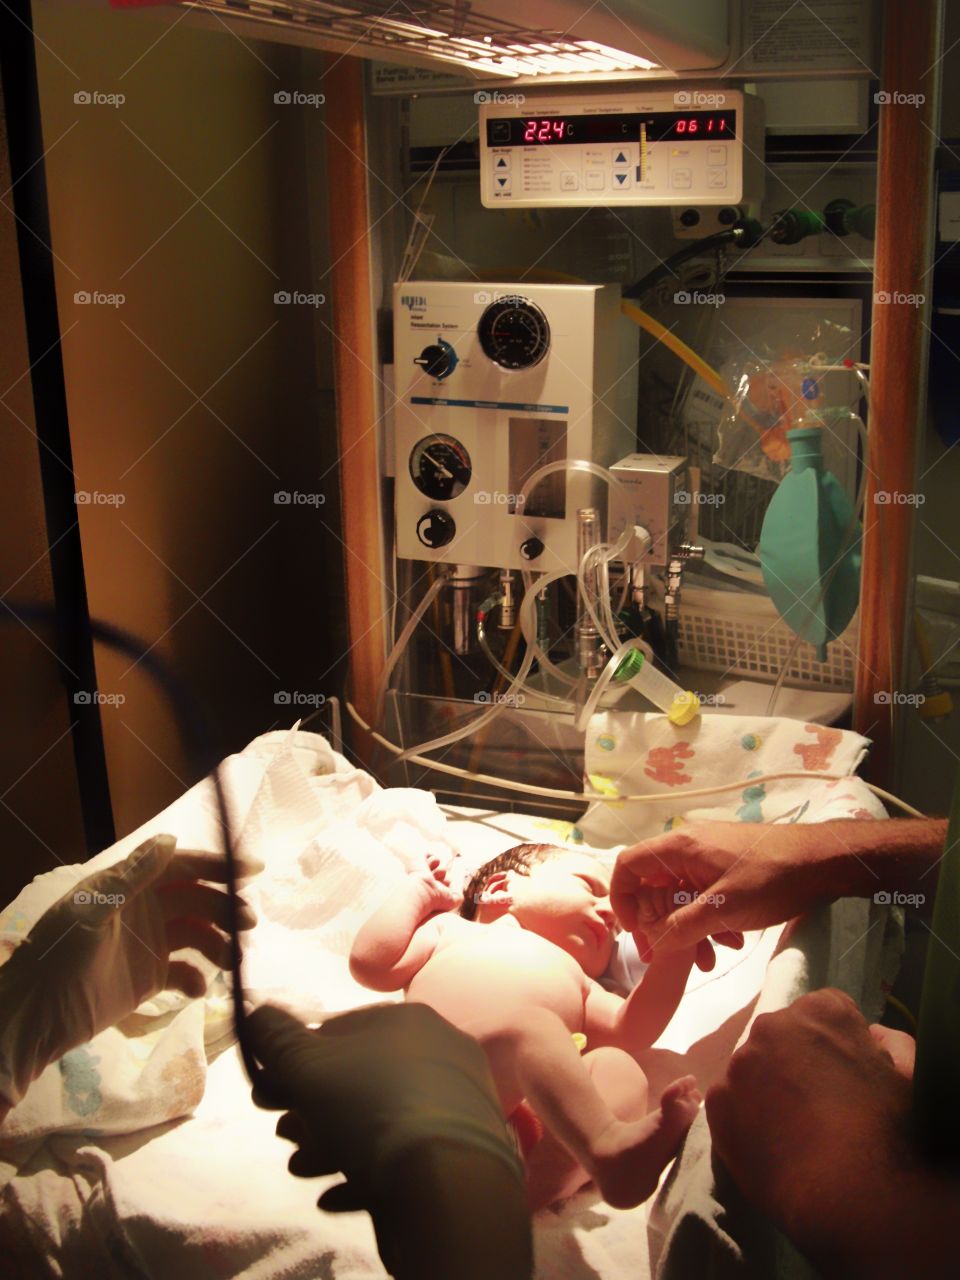 Newborn In Intensive Care At Hospital
